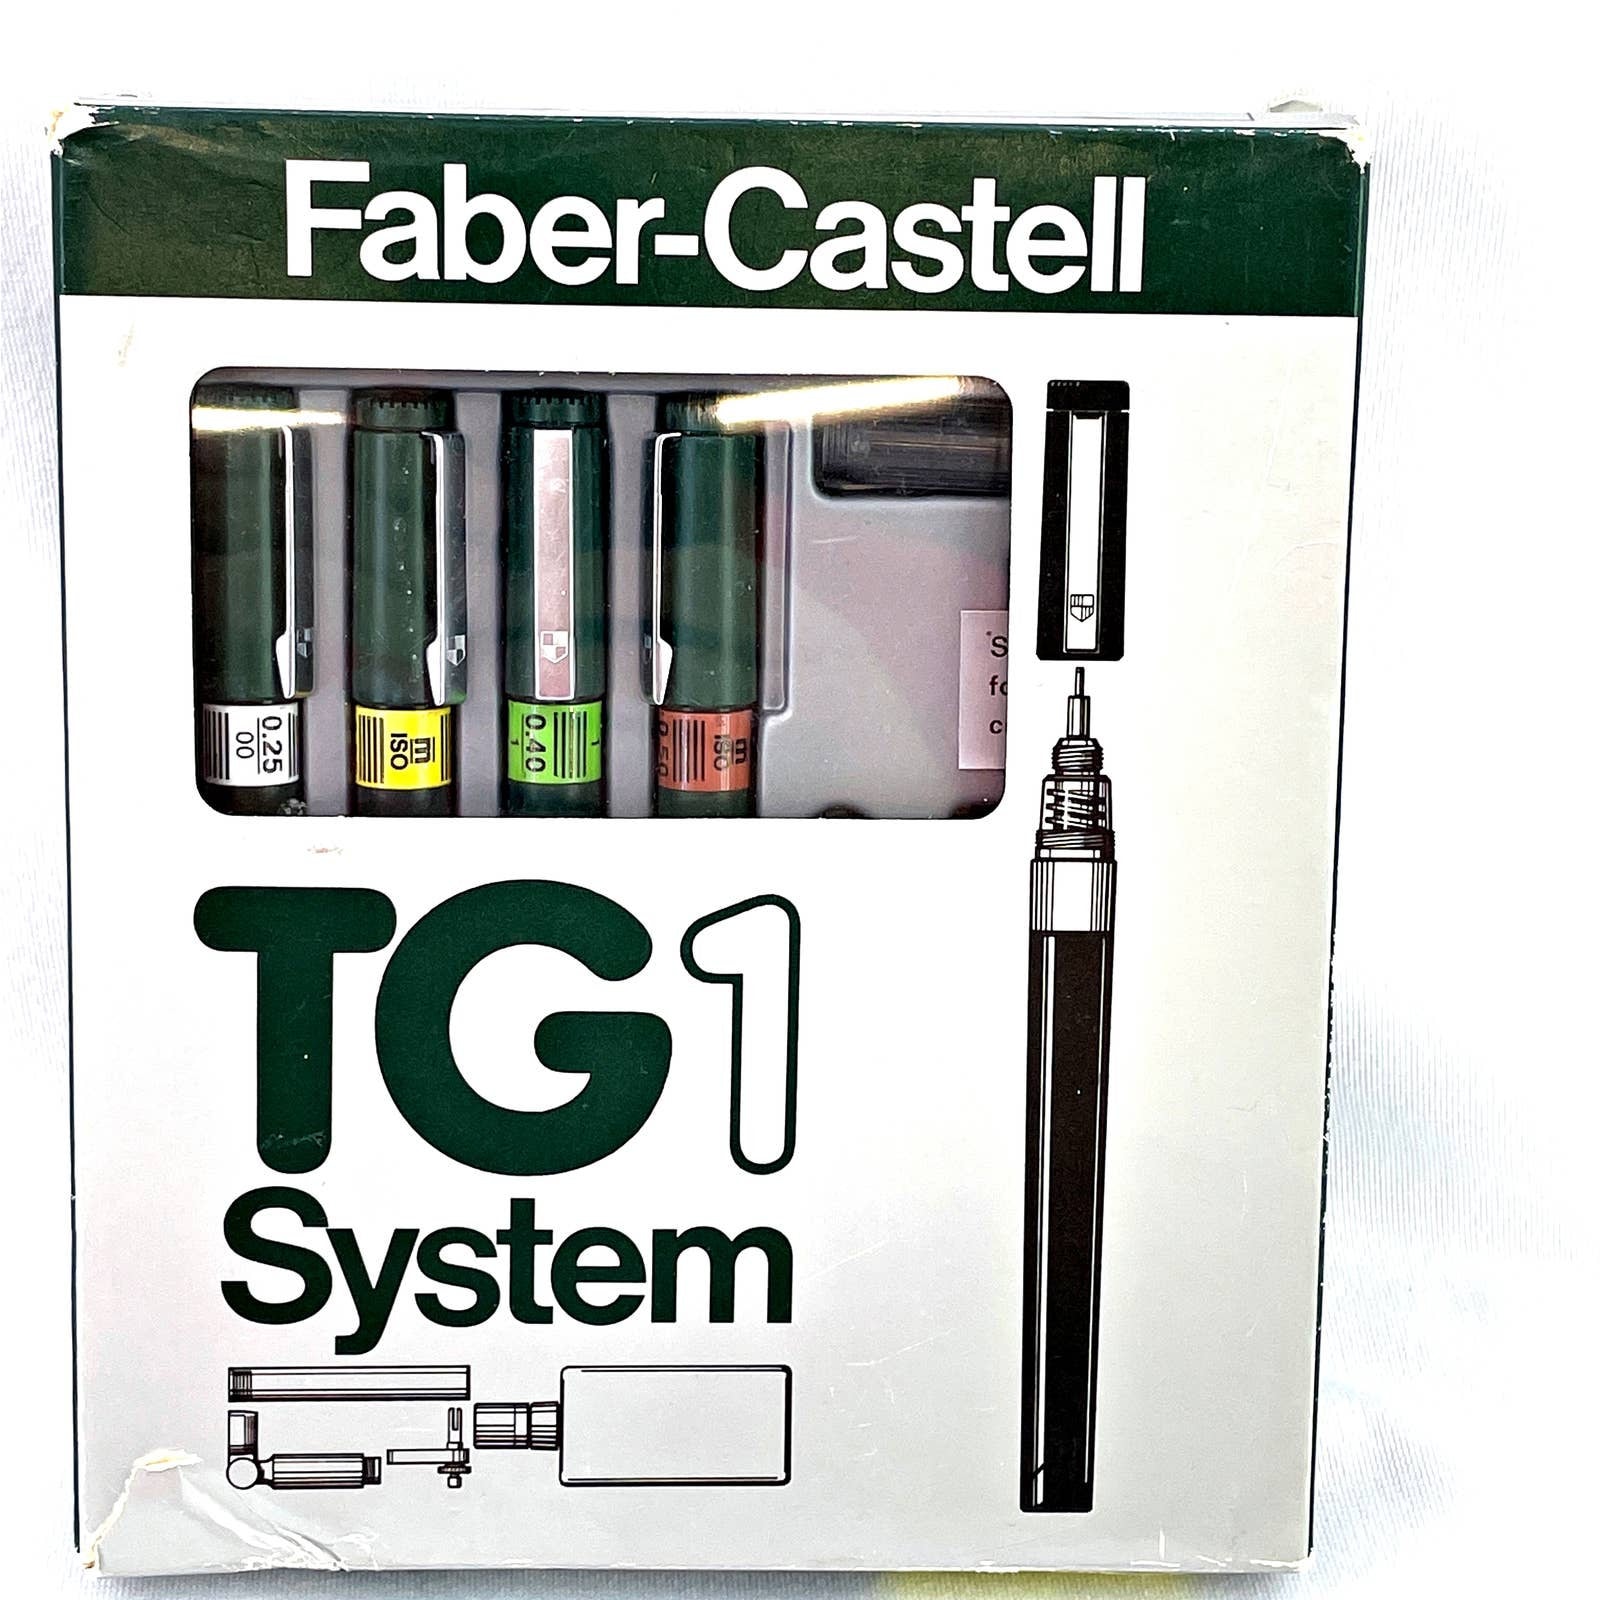 Vintage Faber Castell TG1-S System Pens 4 Pen | Etsy